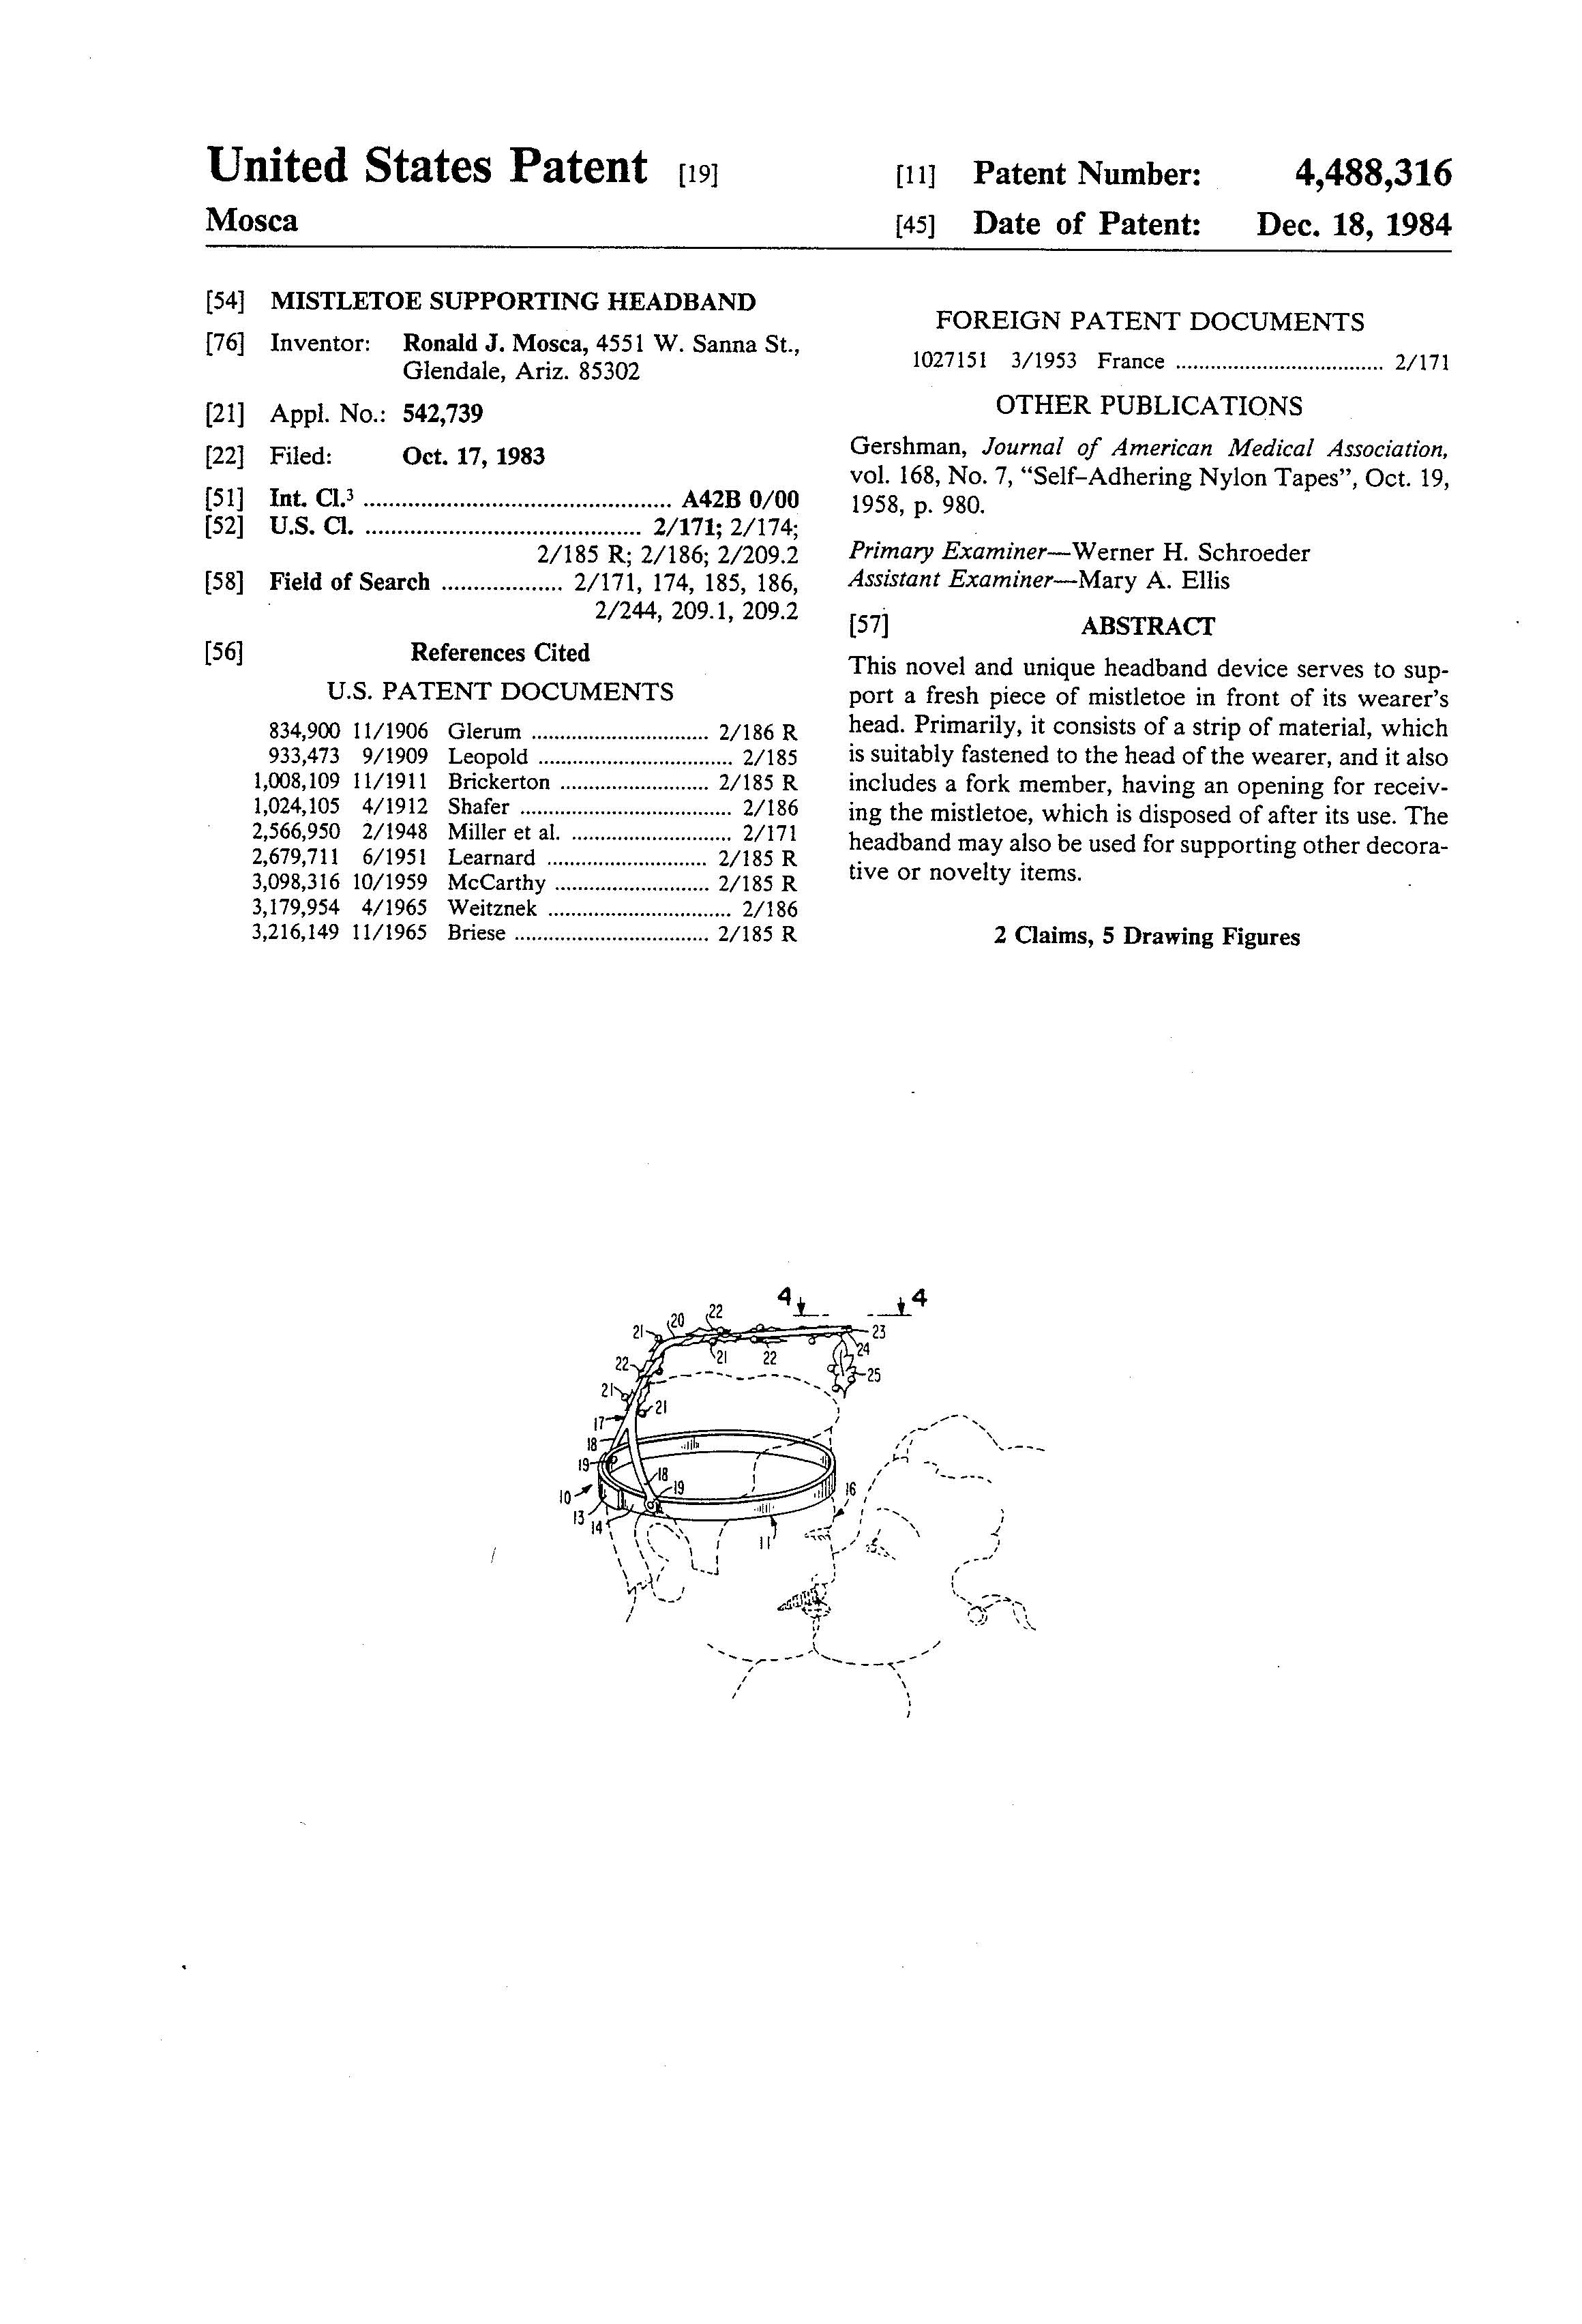 Mistletoe Headband Patent